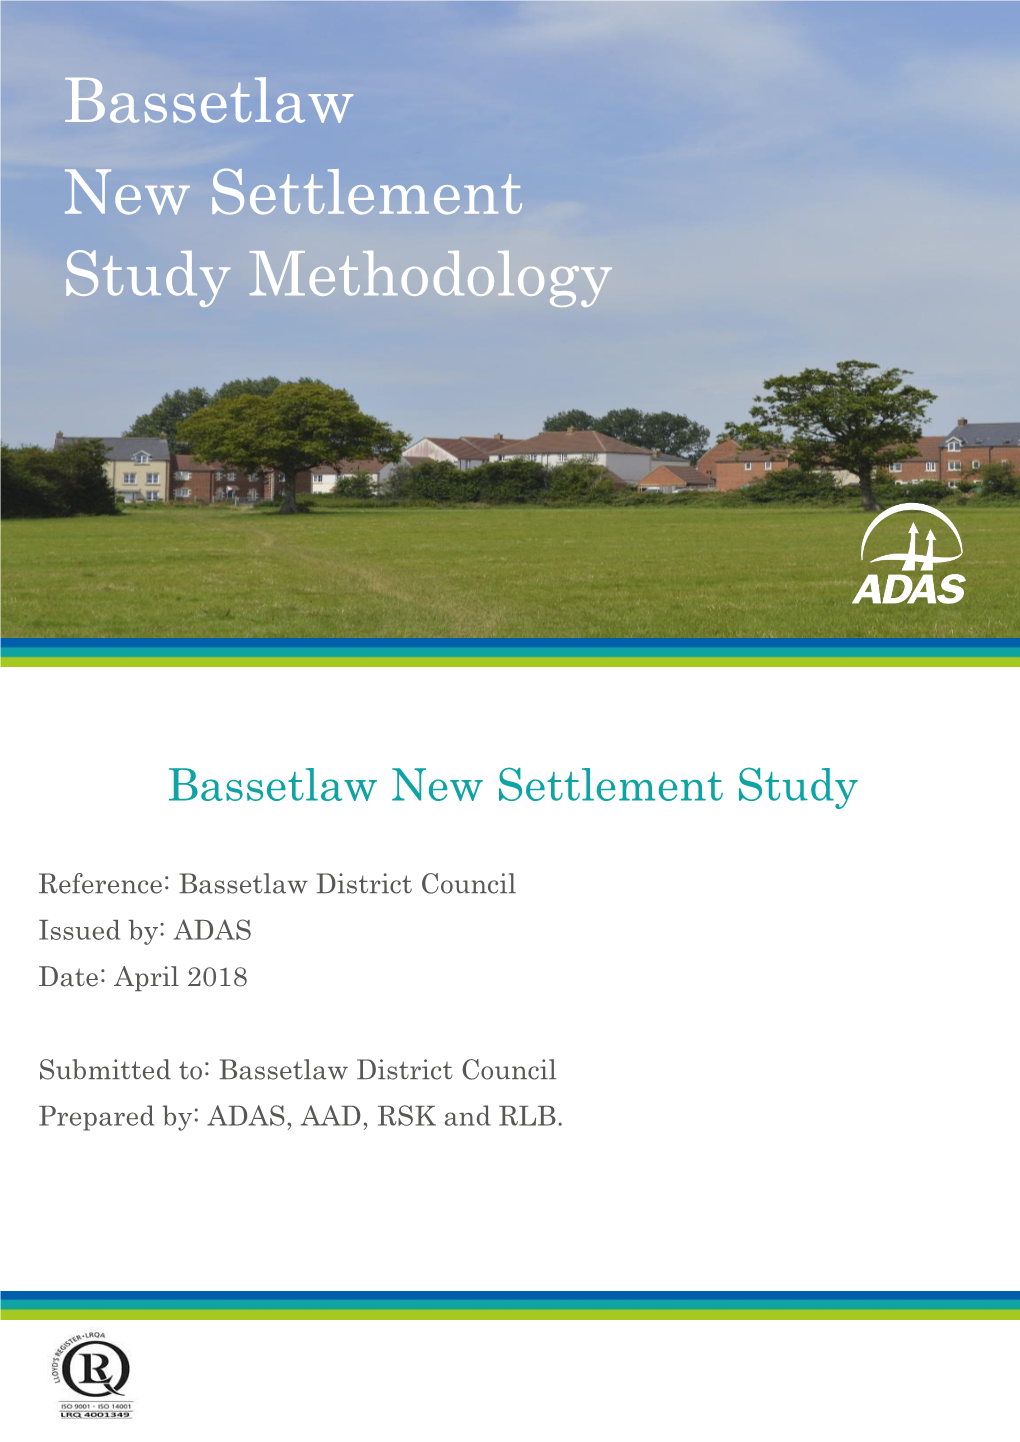 Bassetlaw New Settlement Study